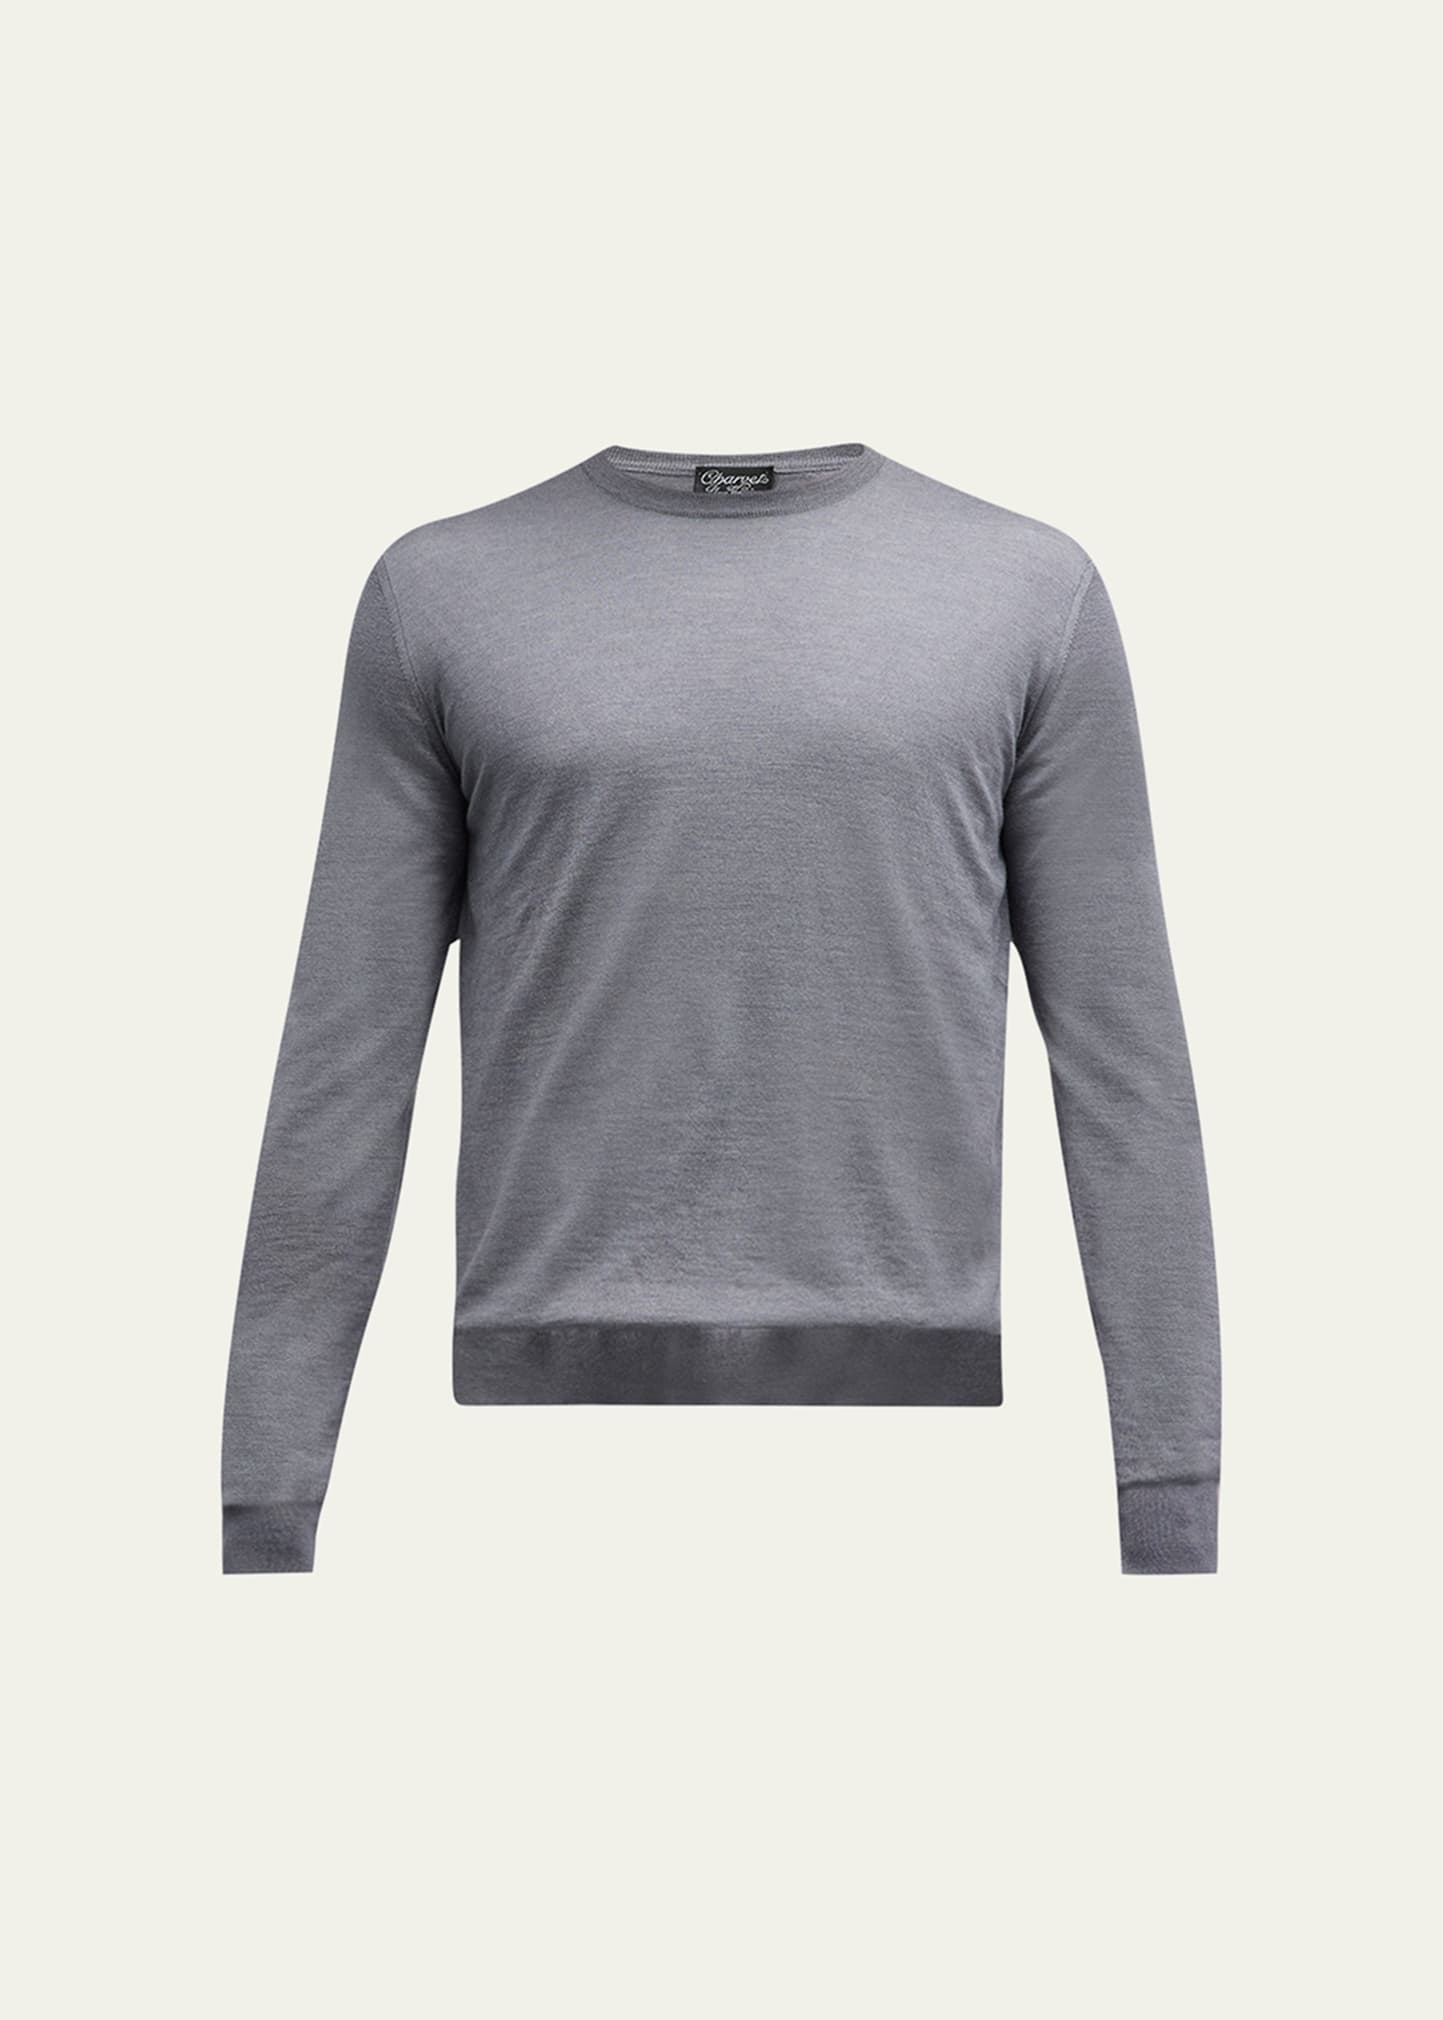 Charvet Men's Solid Cashmere-Silk Crewneck Sweater